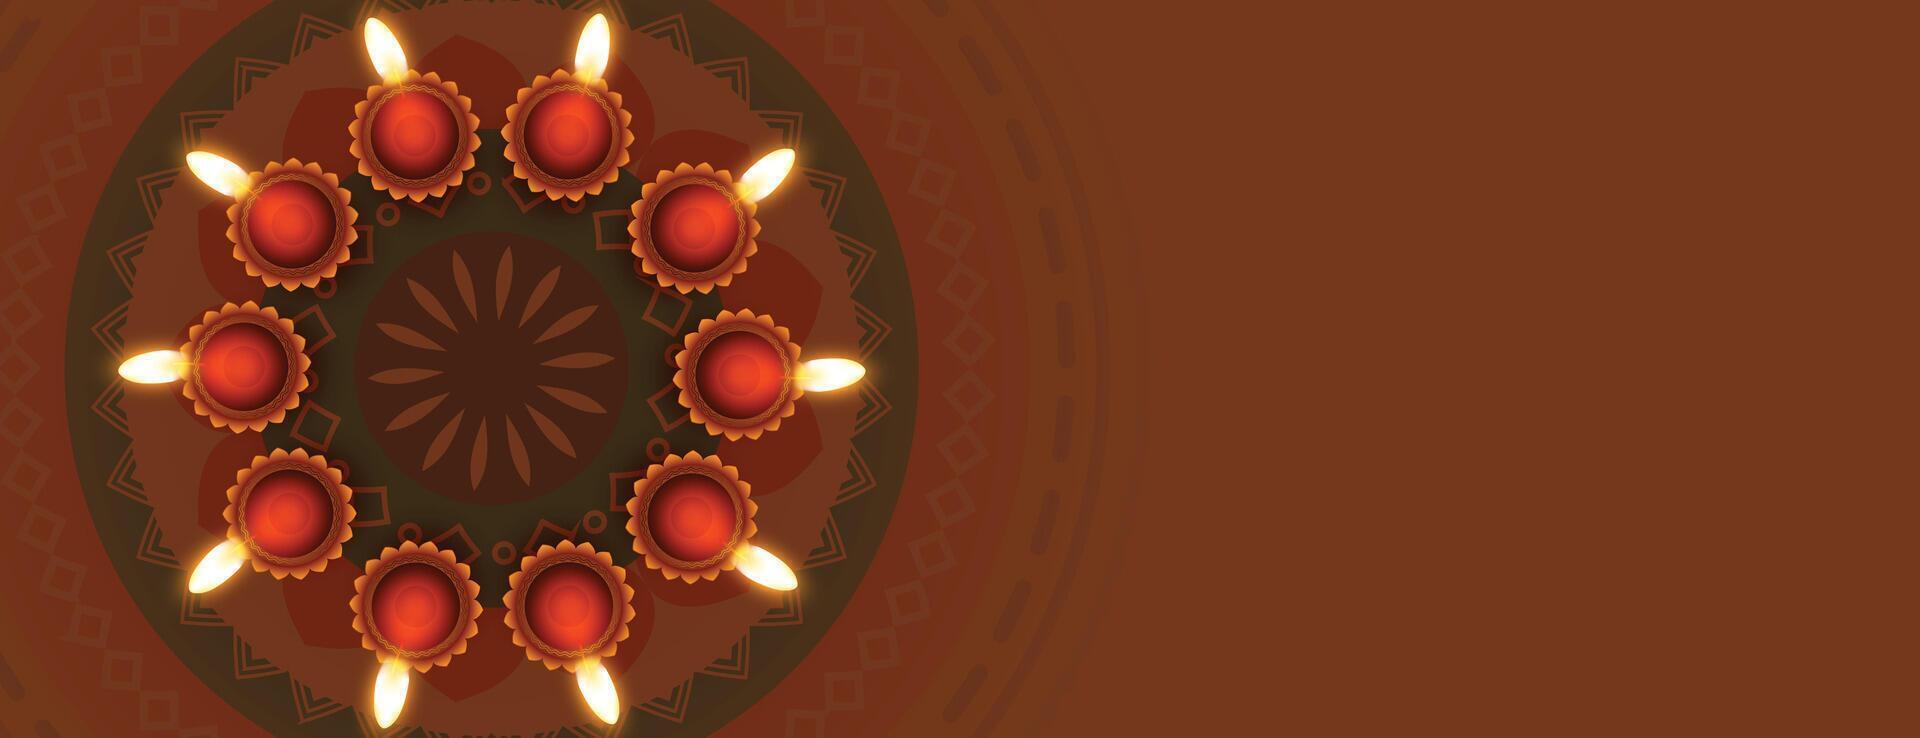 diya and rangoli design for diwali festival vector